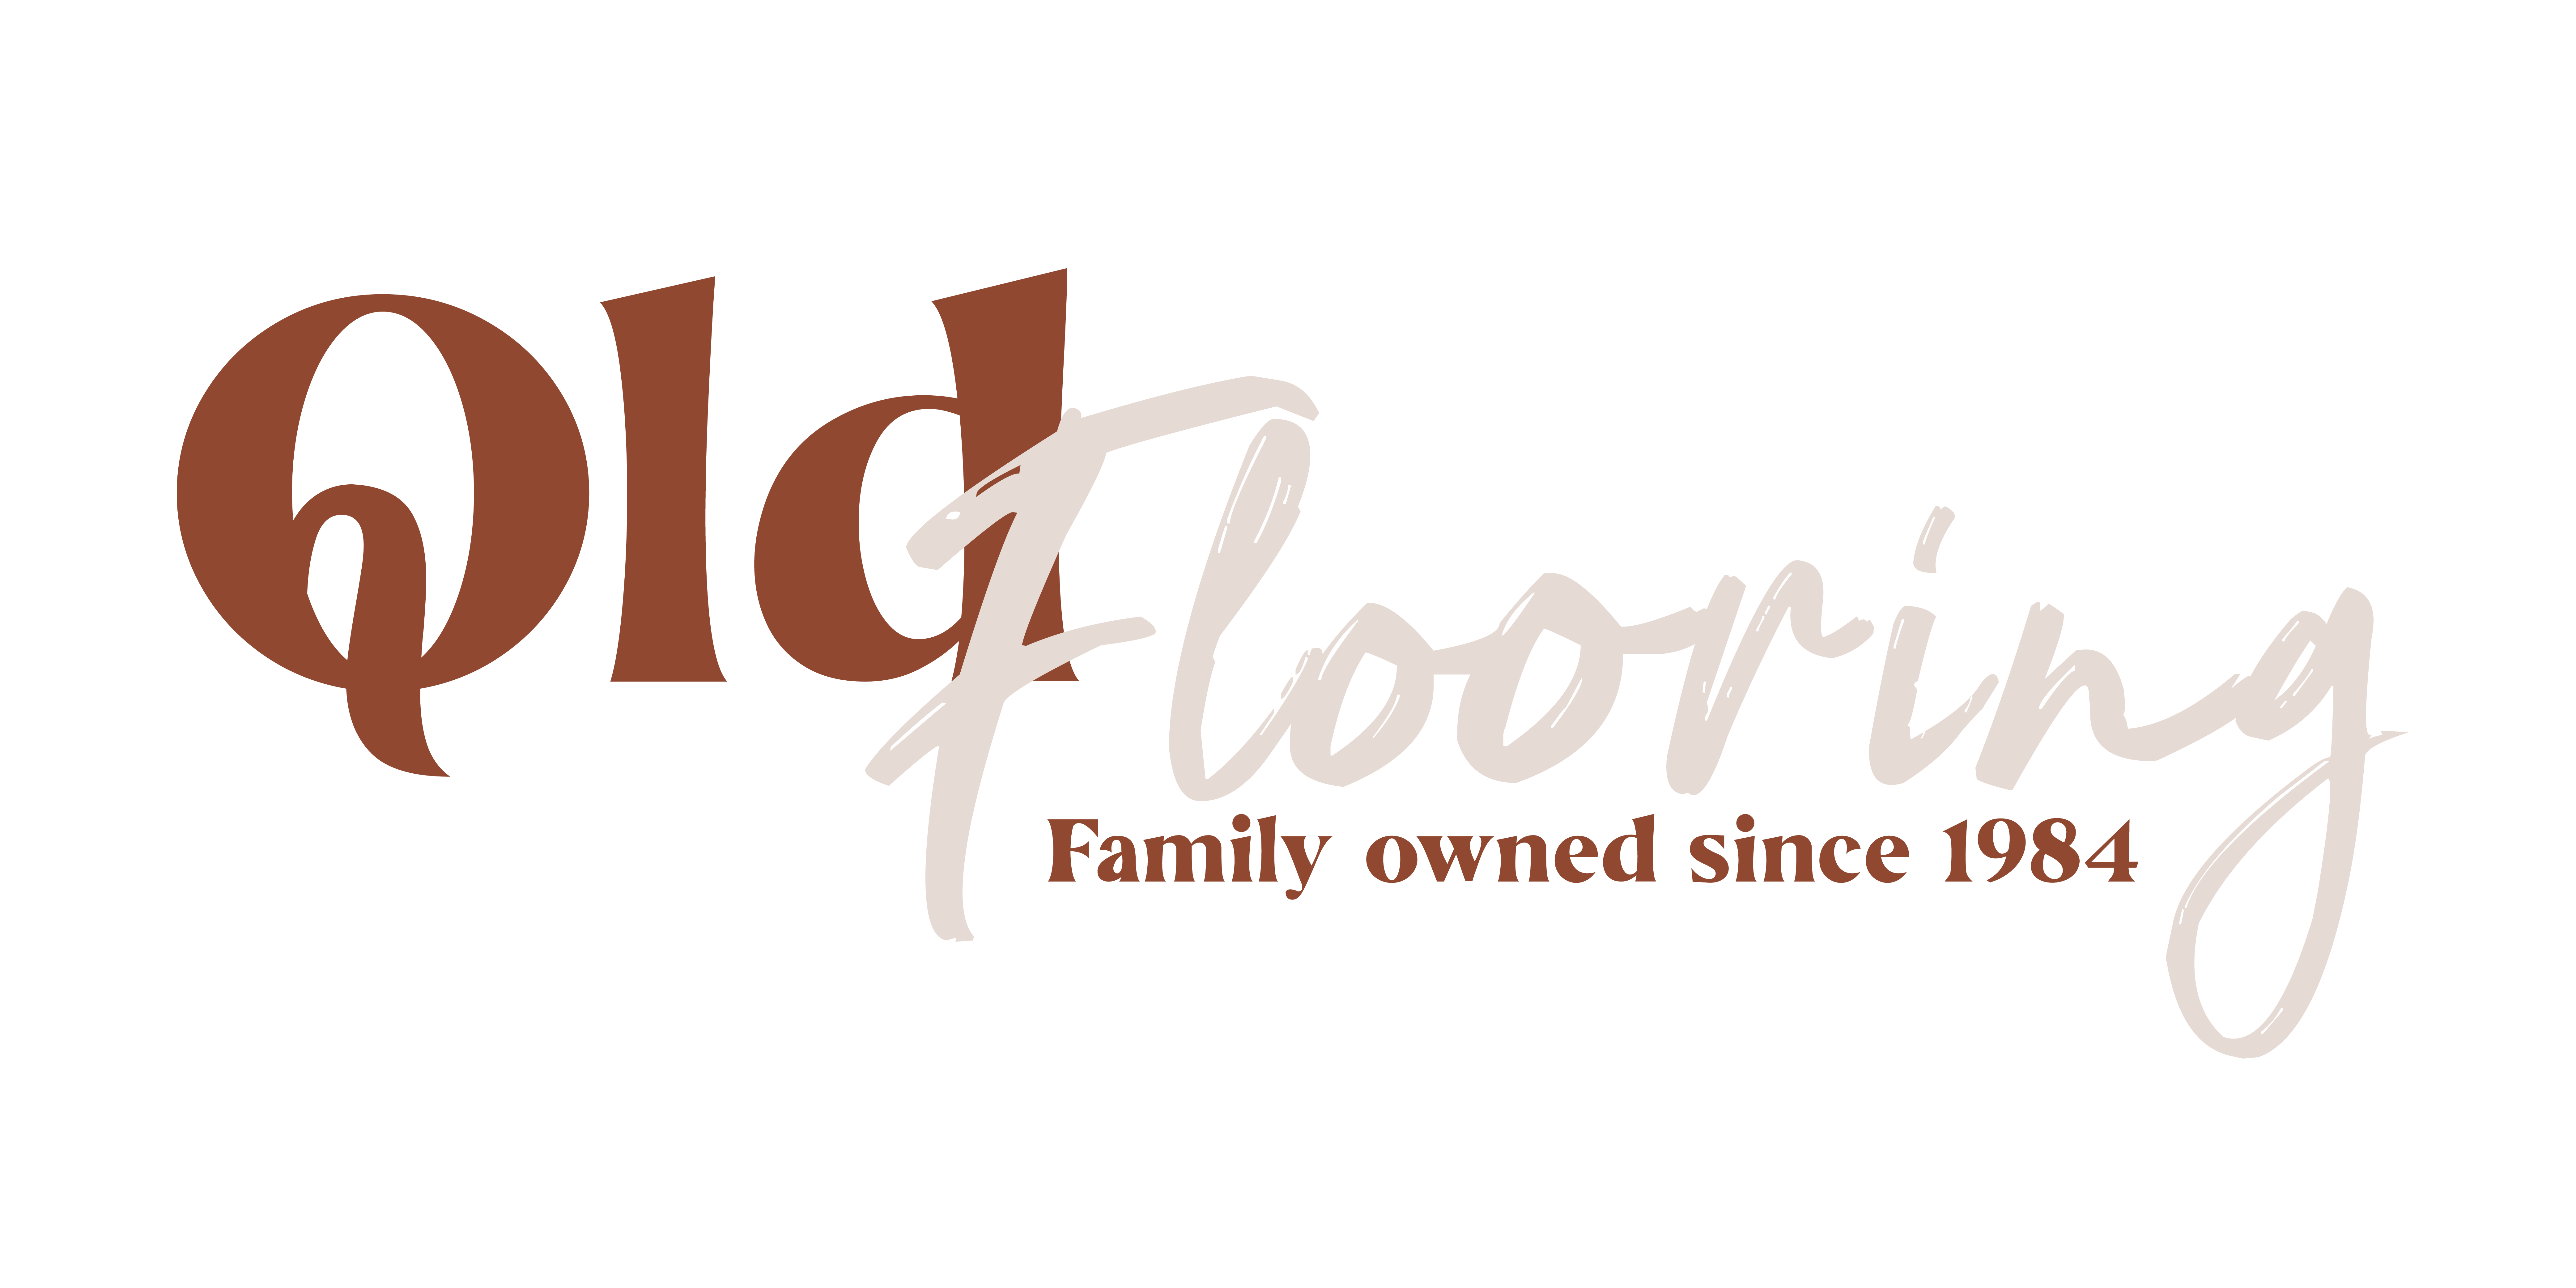 Qld Flooring Icon